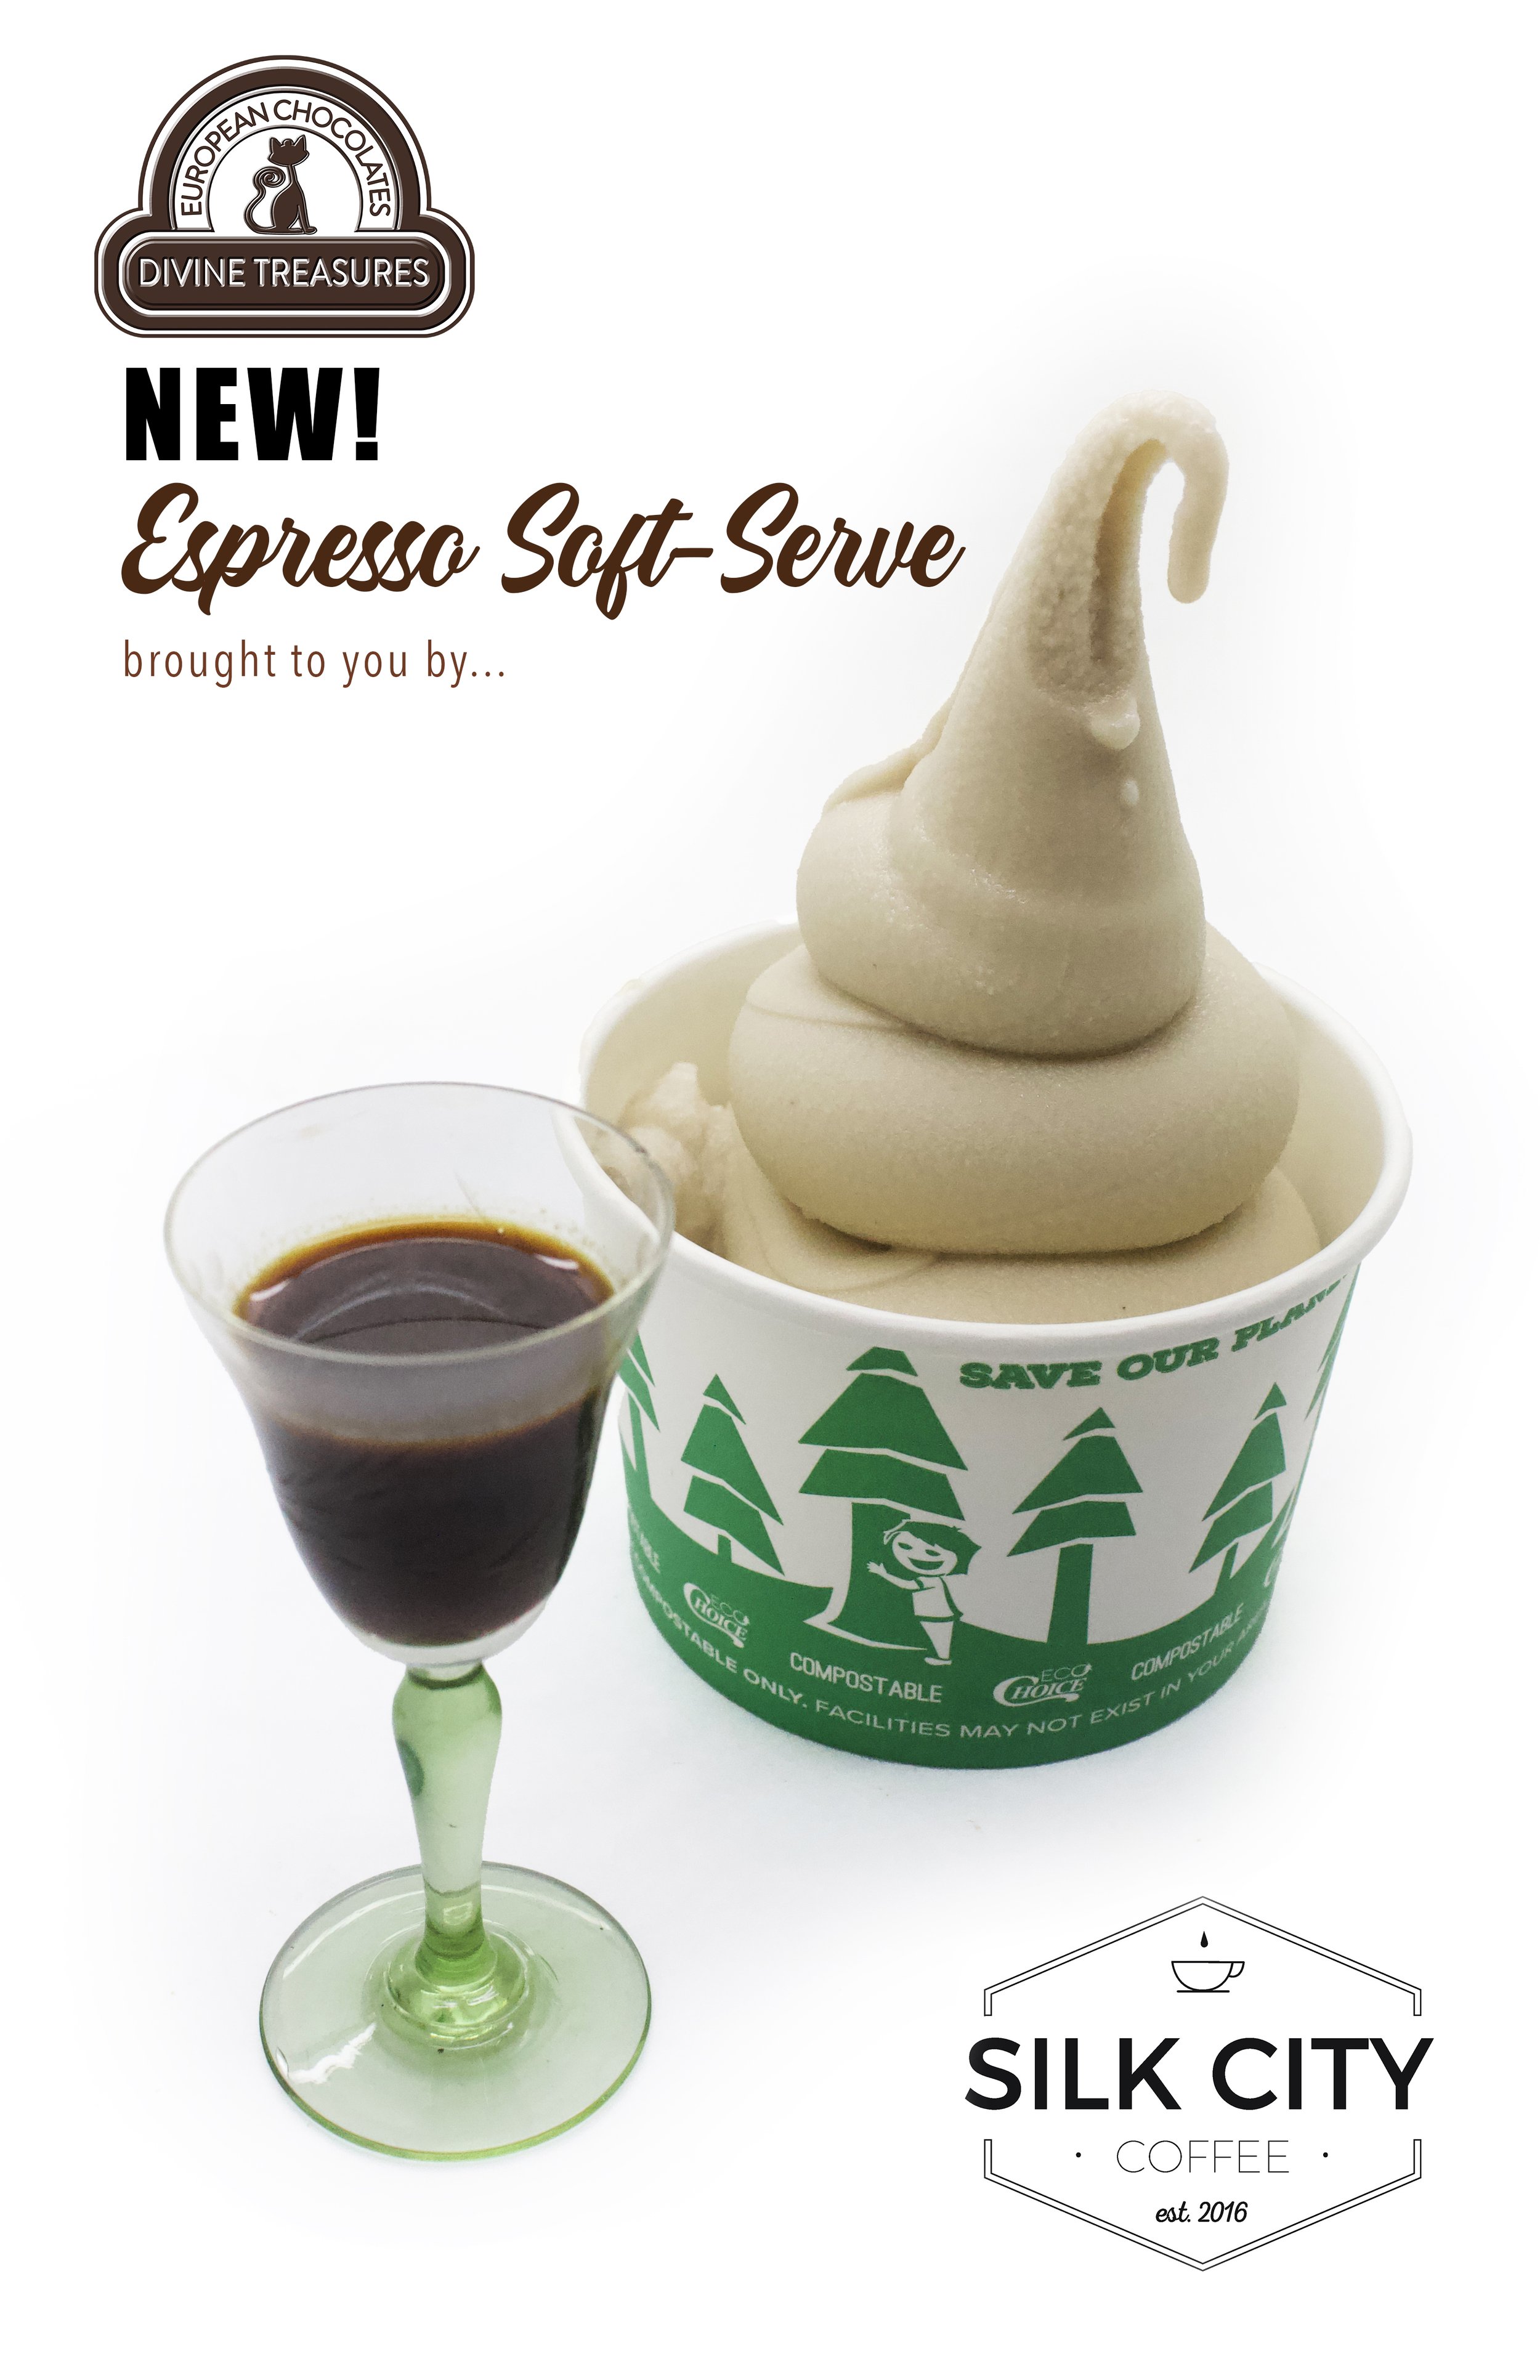 Espresso Soft-Serve